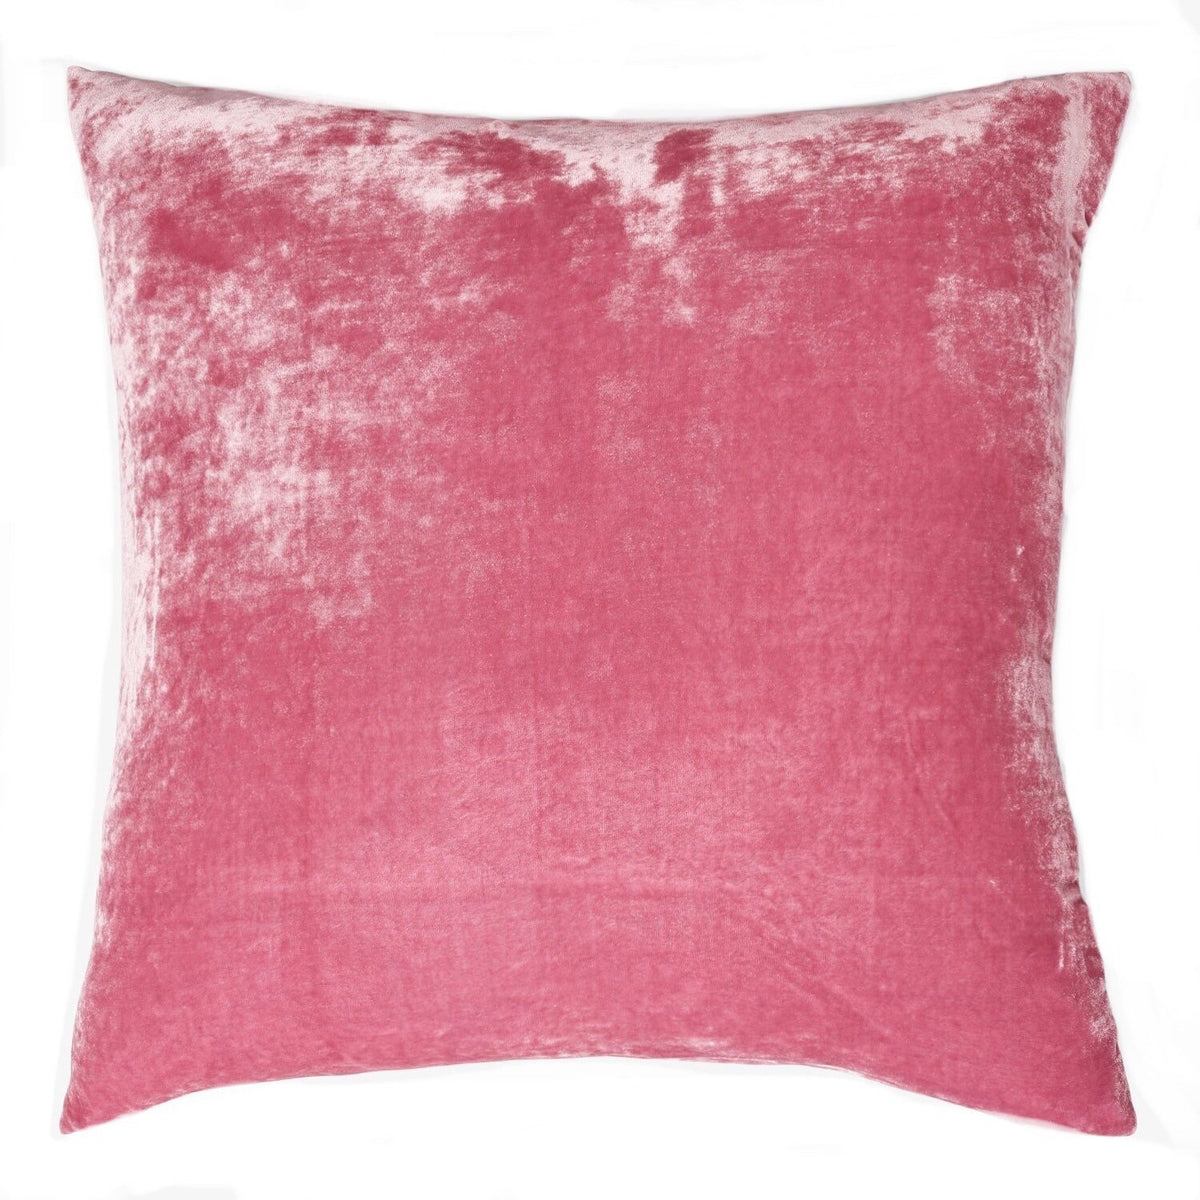 Flesh Pink Velvet Cushion Cover Pillow Case Soft Throw Pillow